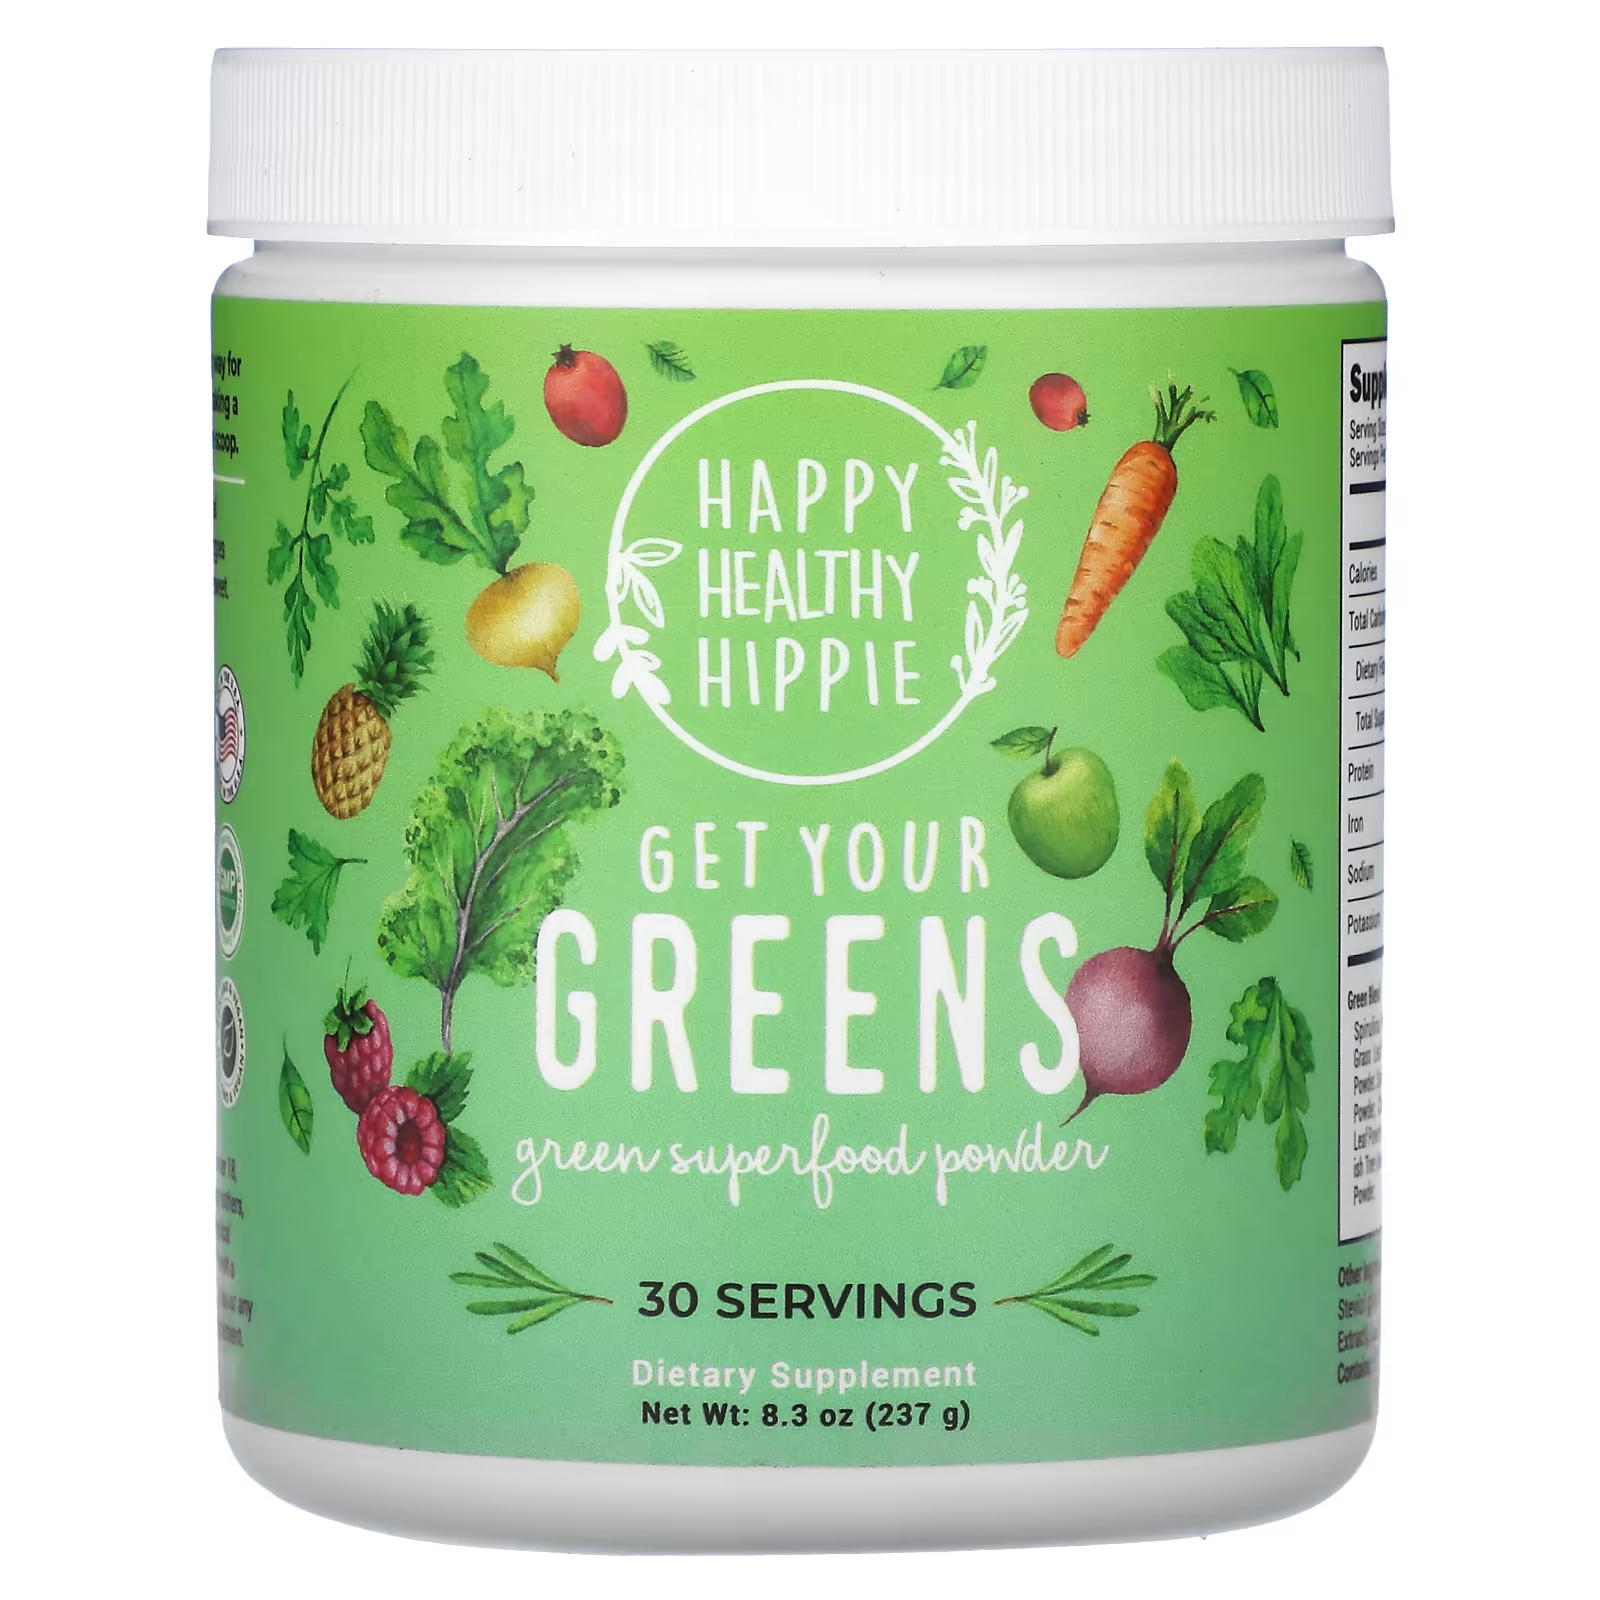 Порошок зеленого суперпродукта Happy Healthy Hippie Get Your Greens цена и фото